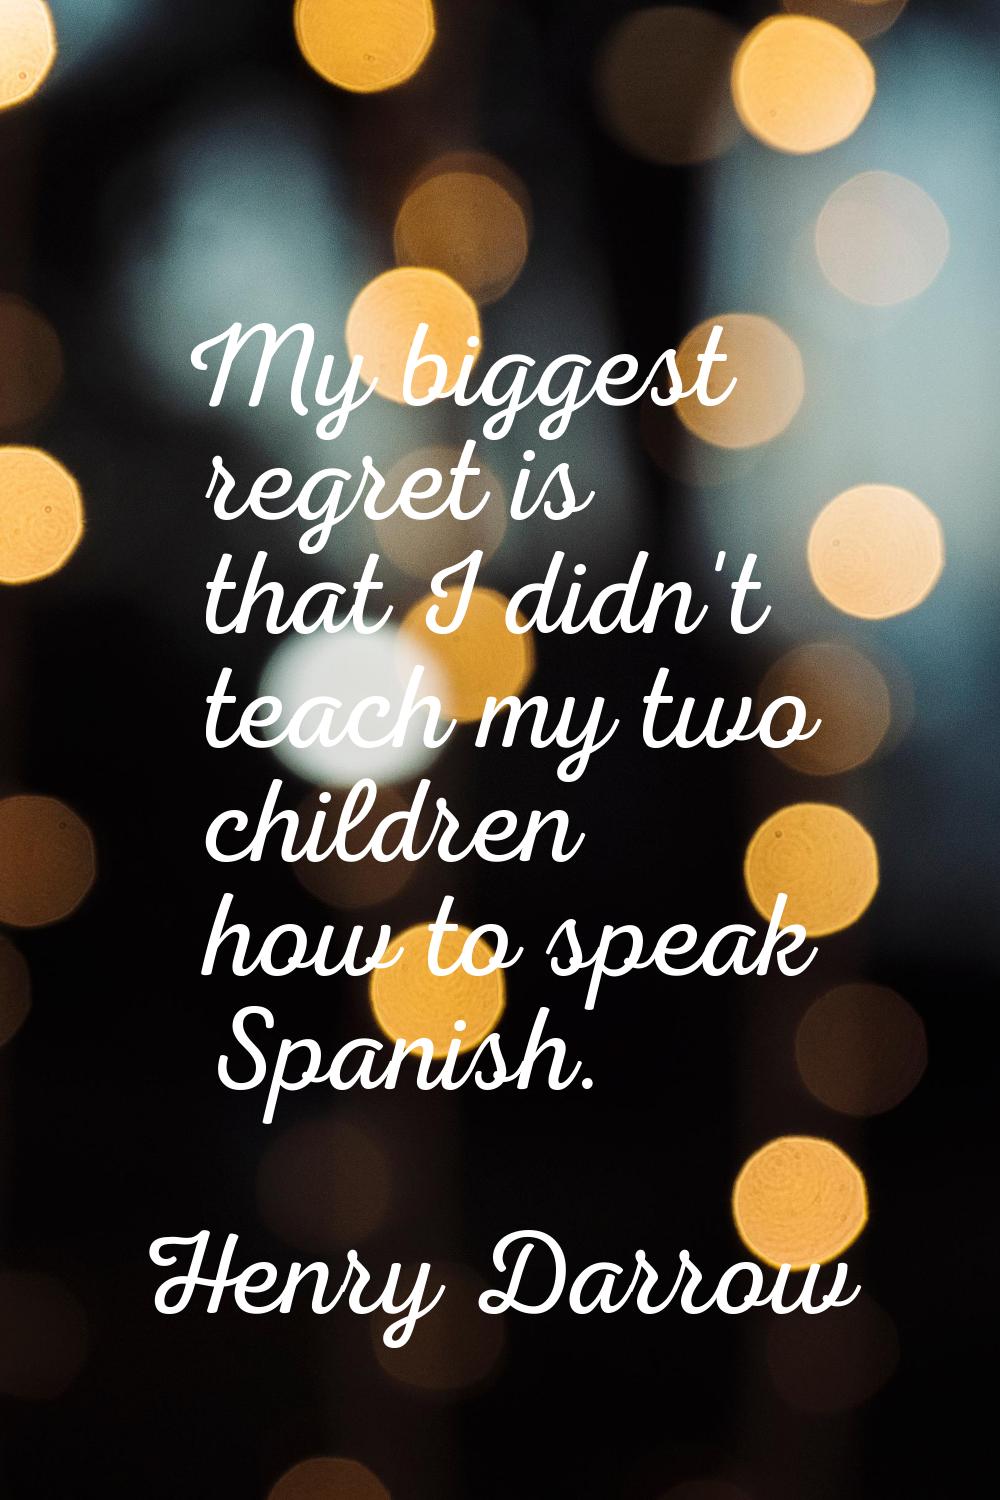 My biggest regret is that I didn't teach my two children how to speak Spanish.